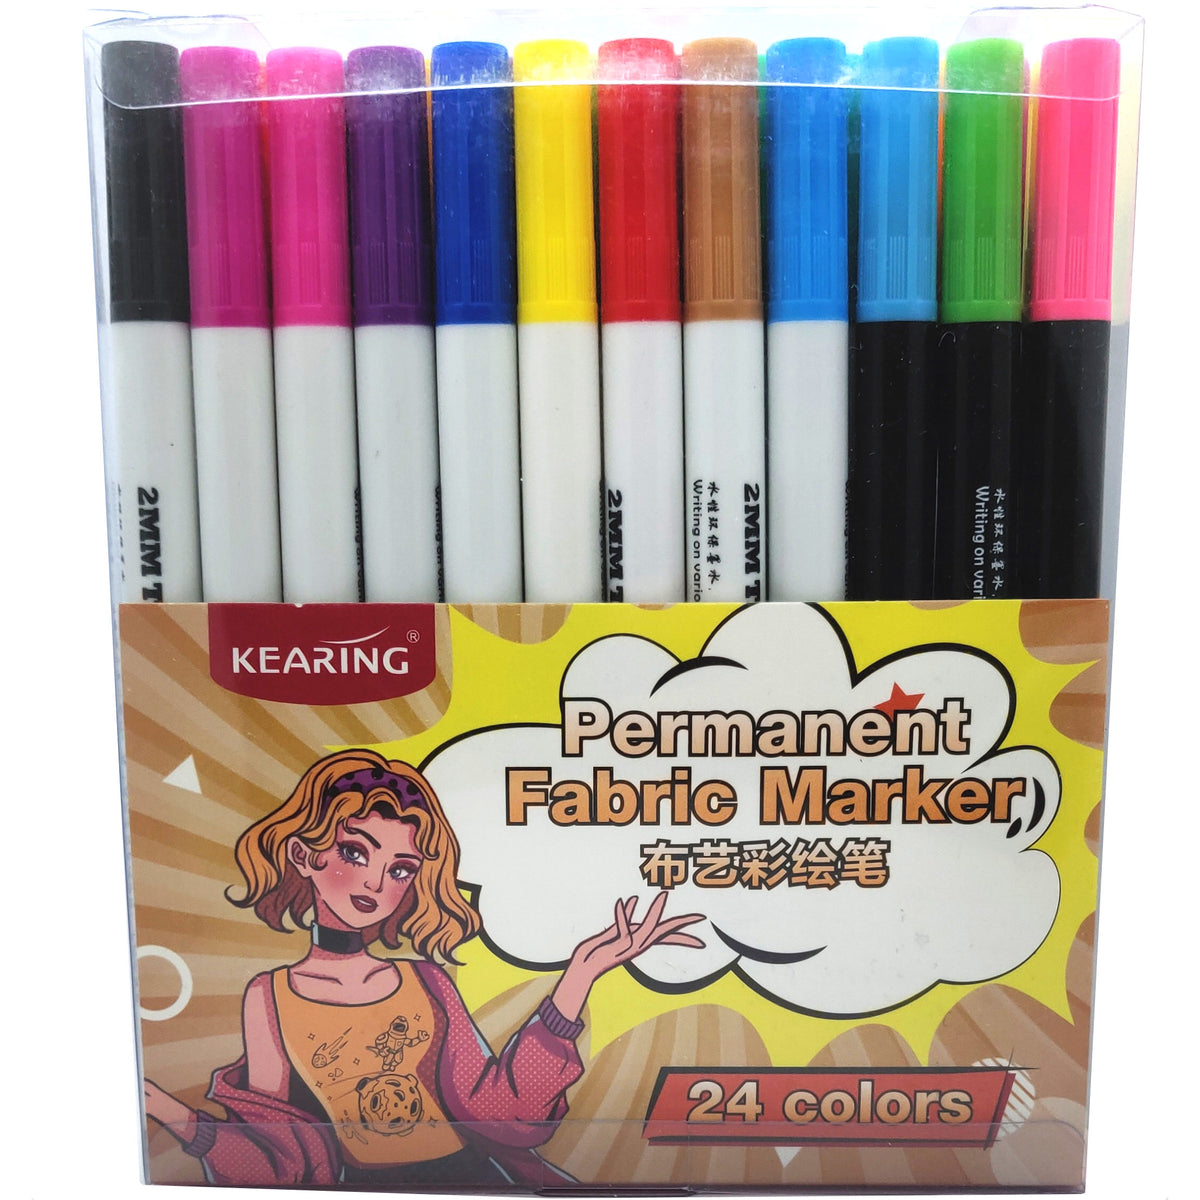 Fabric Markers Pen, 32 Colors Permanent Fabric Paint Pens Art